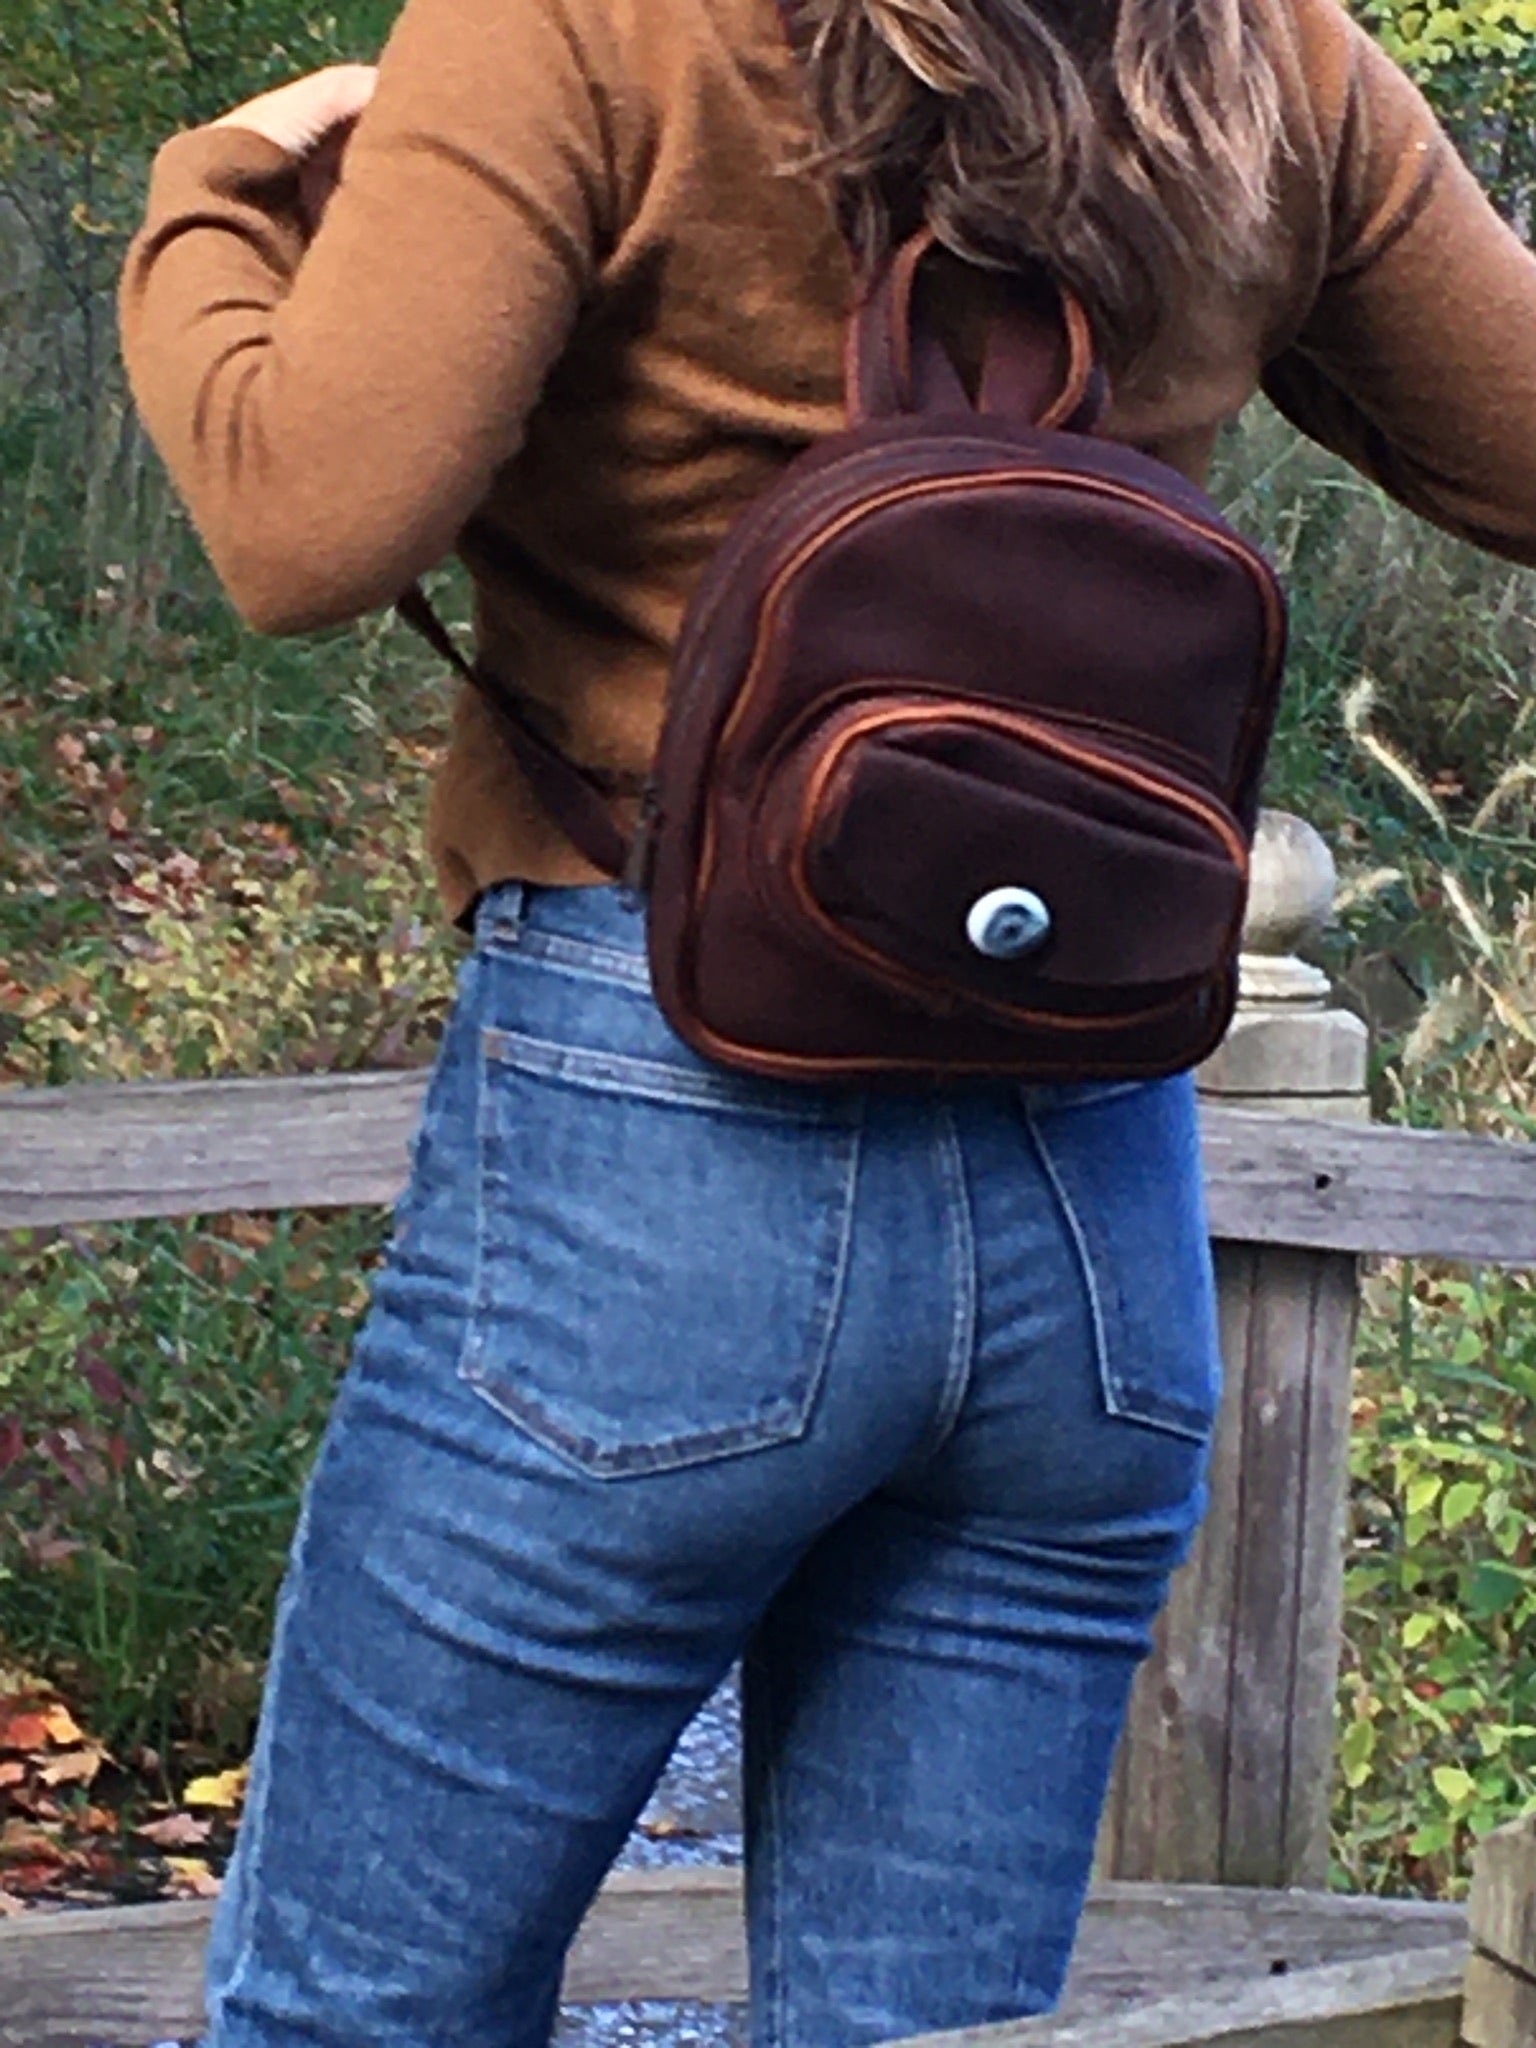 Ashwood Michigan Leather Mini Backpack: M-65